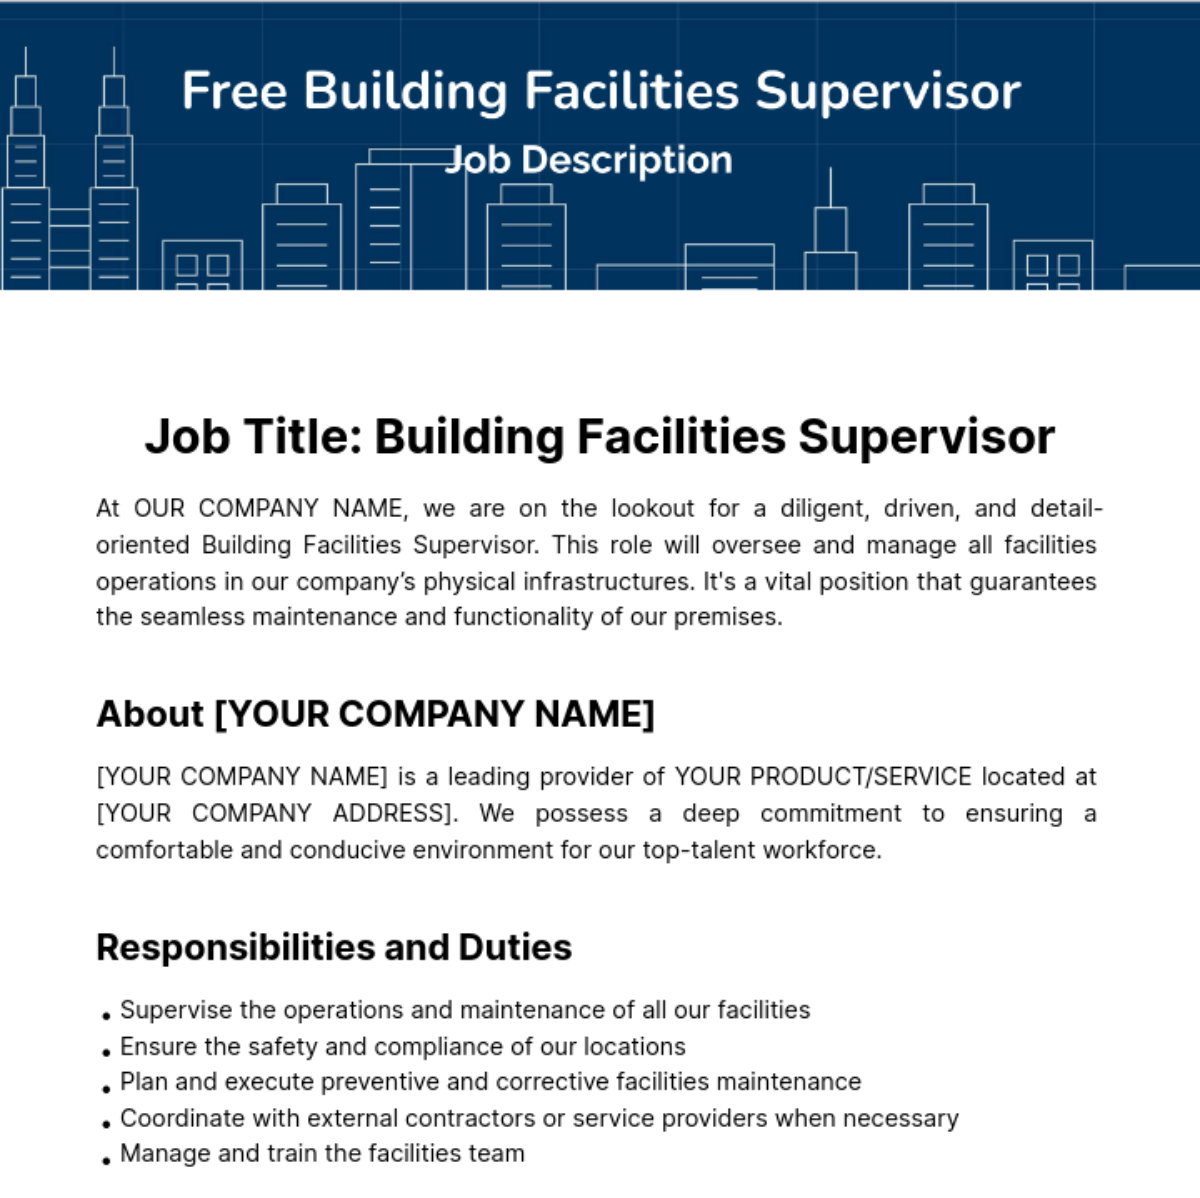 Free Building Facilities Supervisor Job Description Template